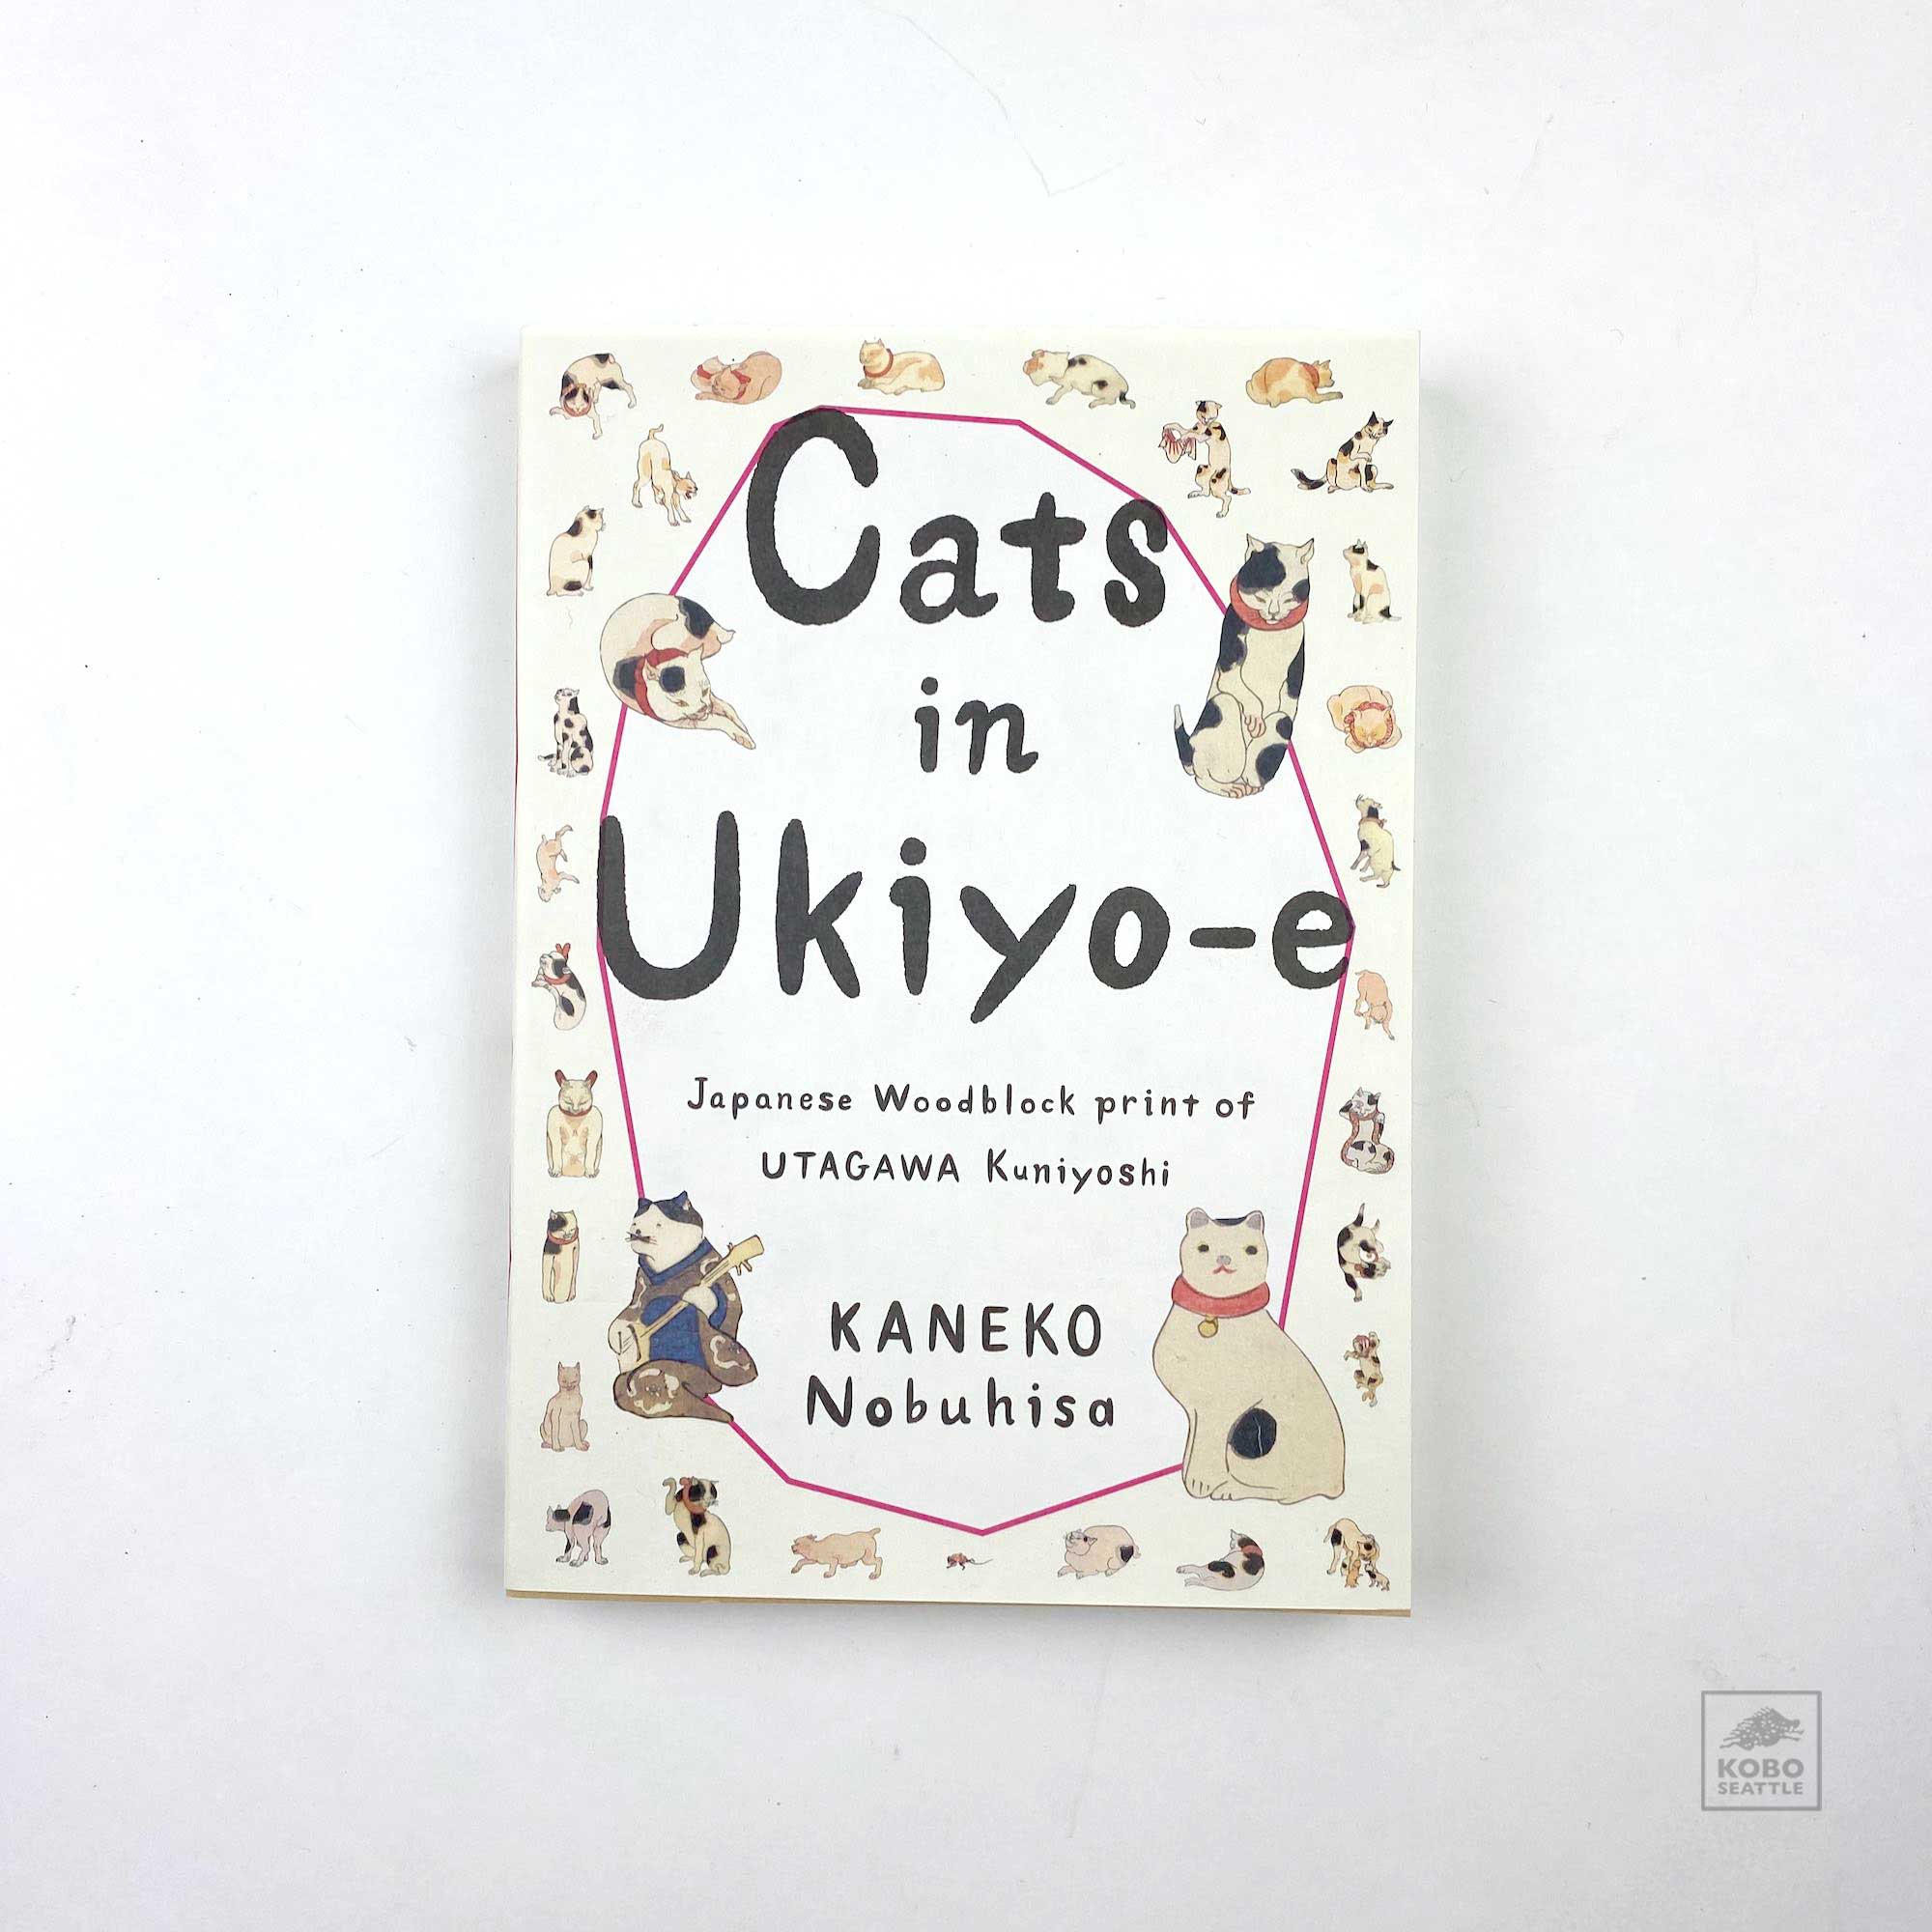 Book: Cats in Ukiyo-e